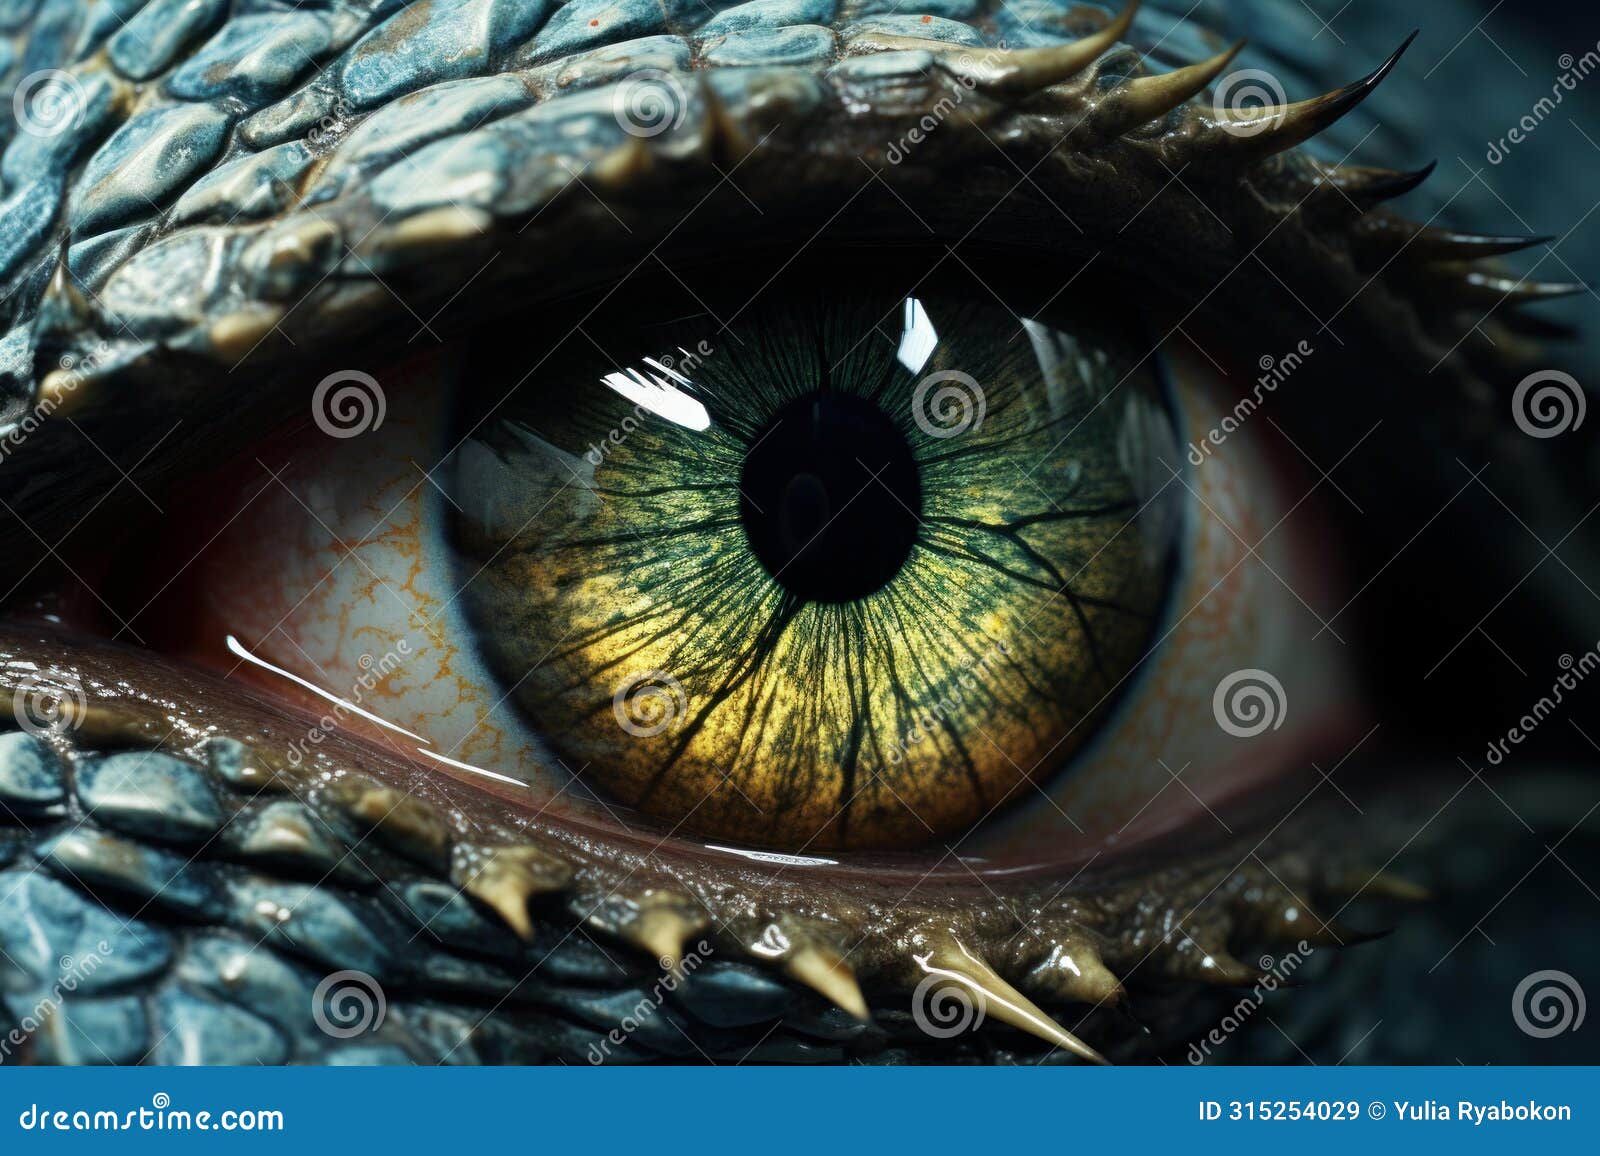 alien-like reptilian eye closeup. generate ai